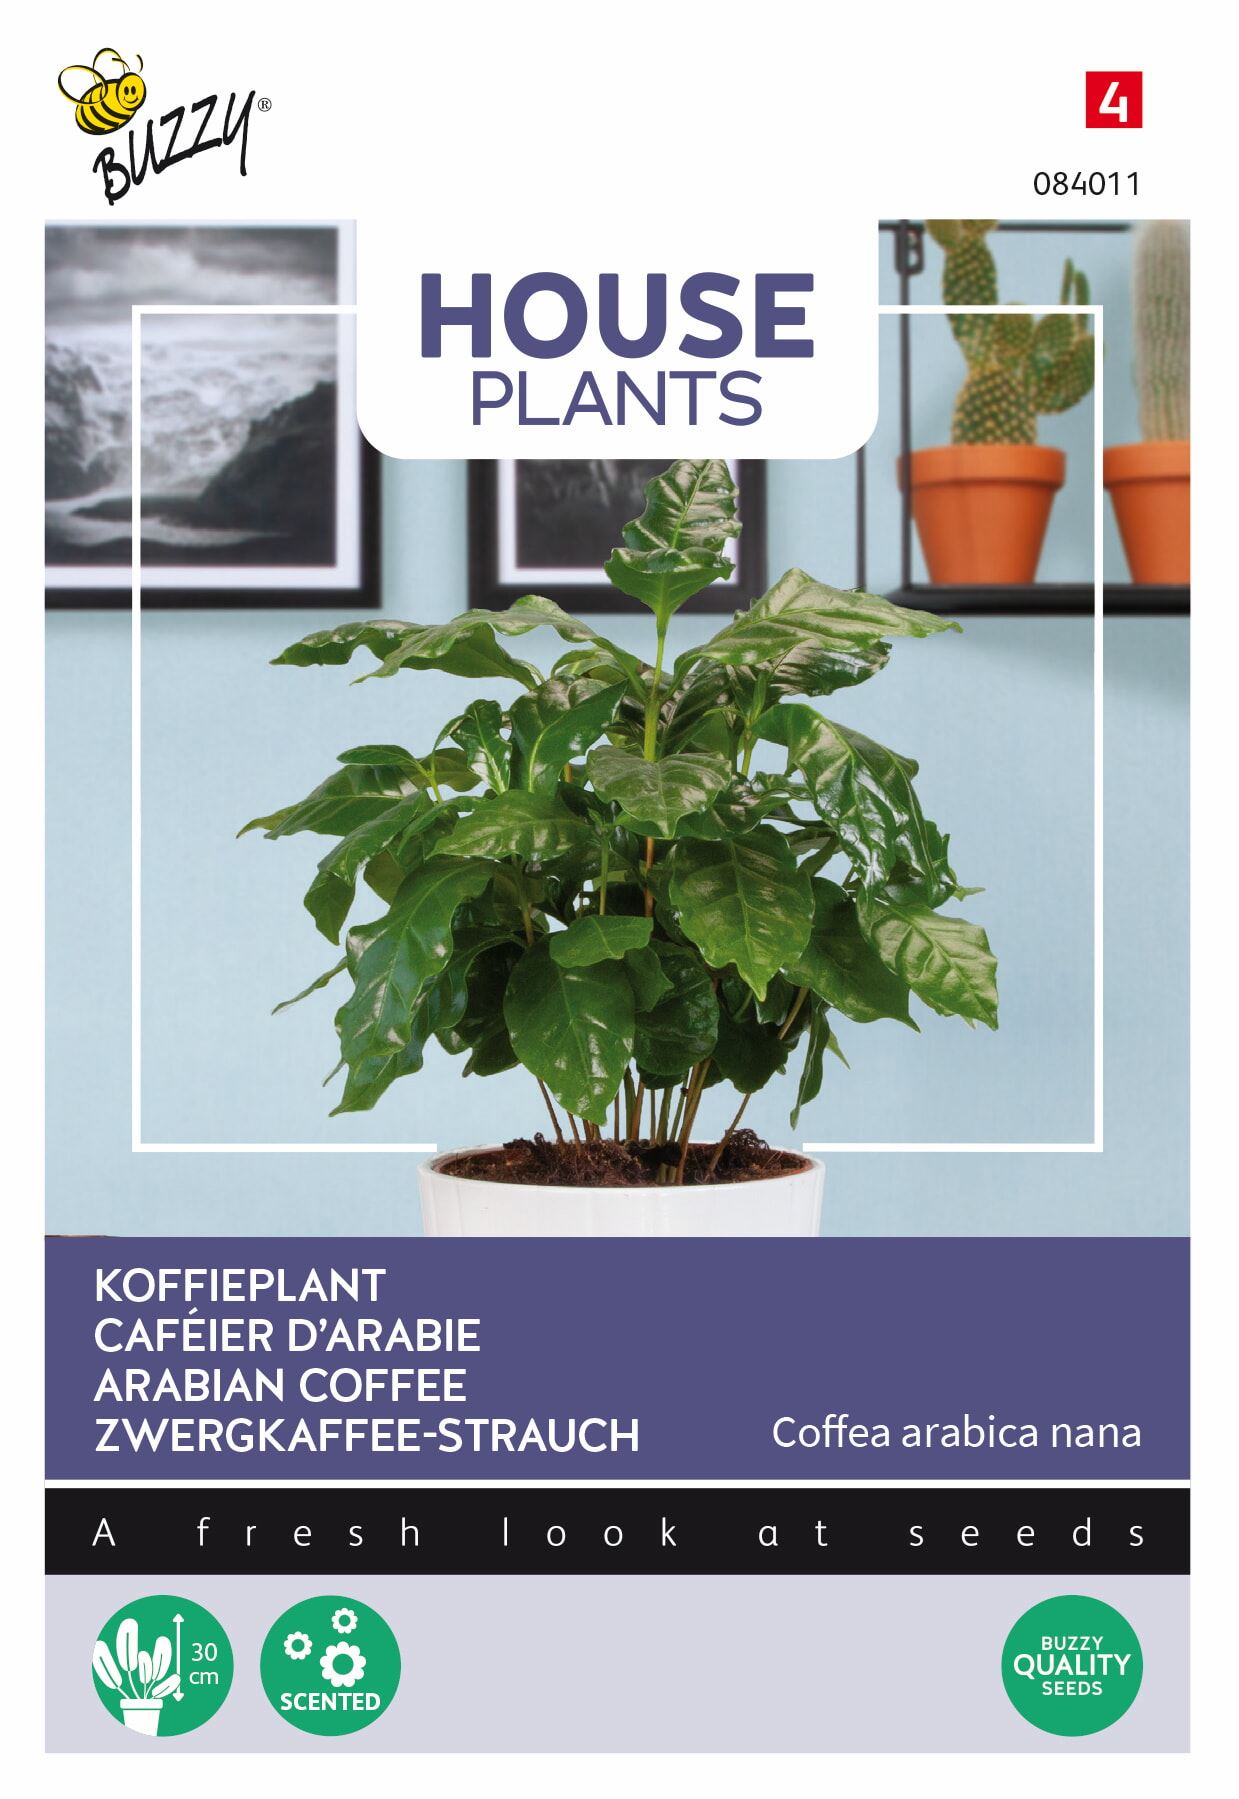 Buzzy-House-Plants-Coffea-Arabica-koffieplant